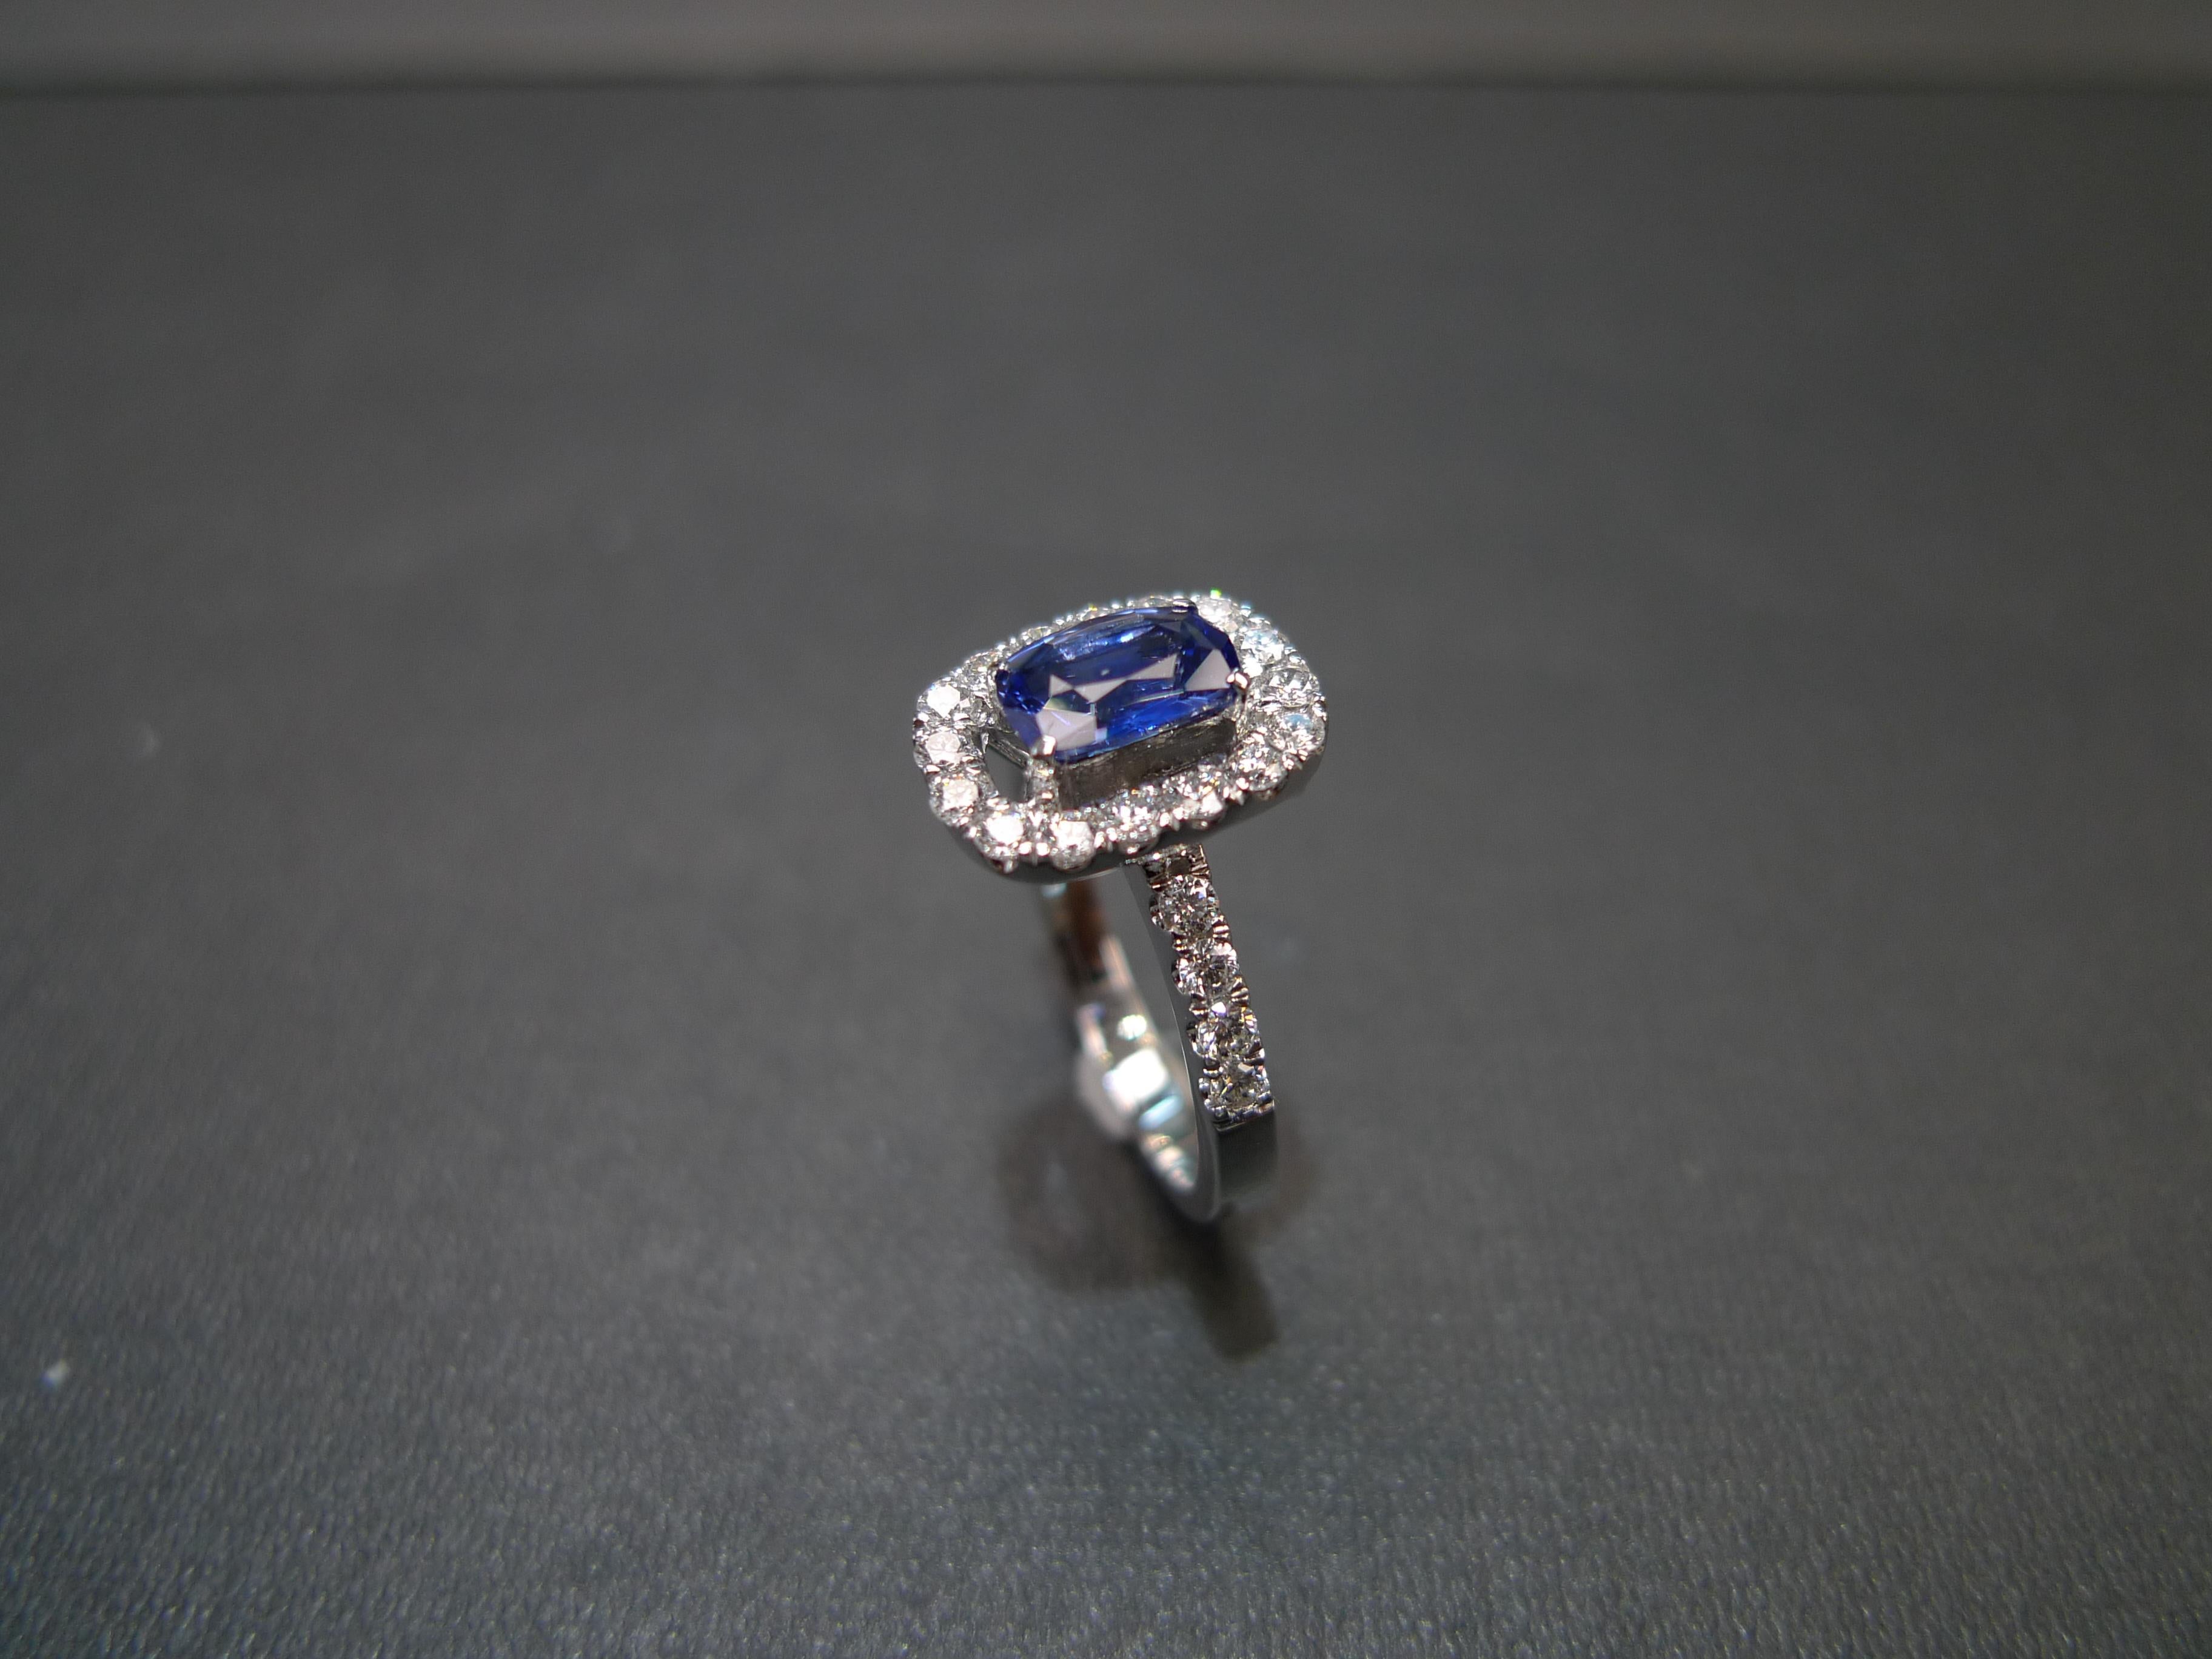 For Sale:  Cushion Cut Natural Burma Blue Sapphire Diamond Halo Engagement Ring White Gold 7